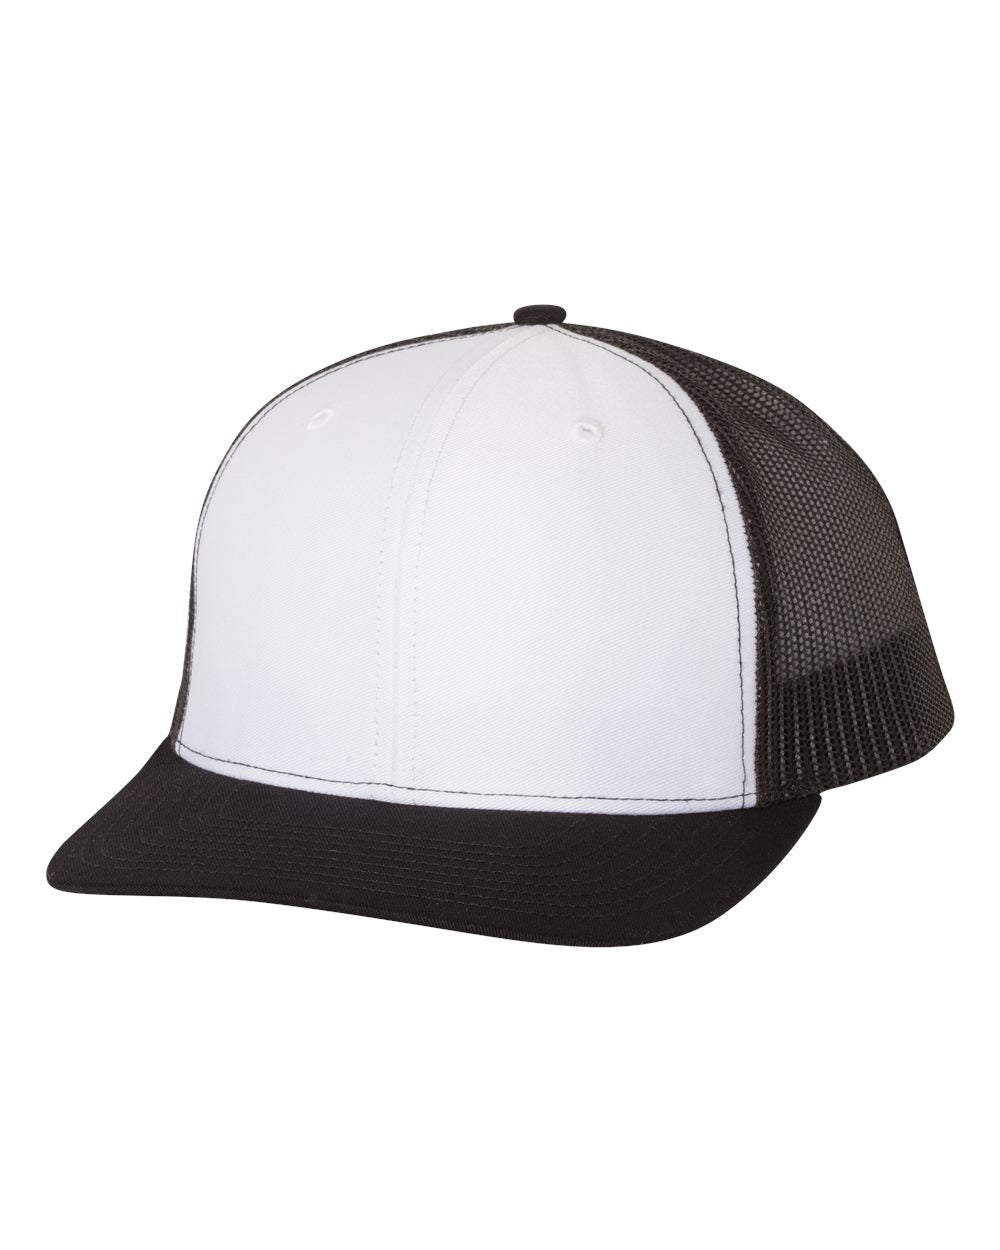 richardson cap white black